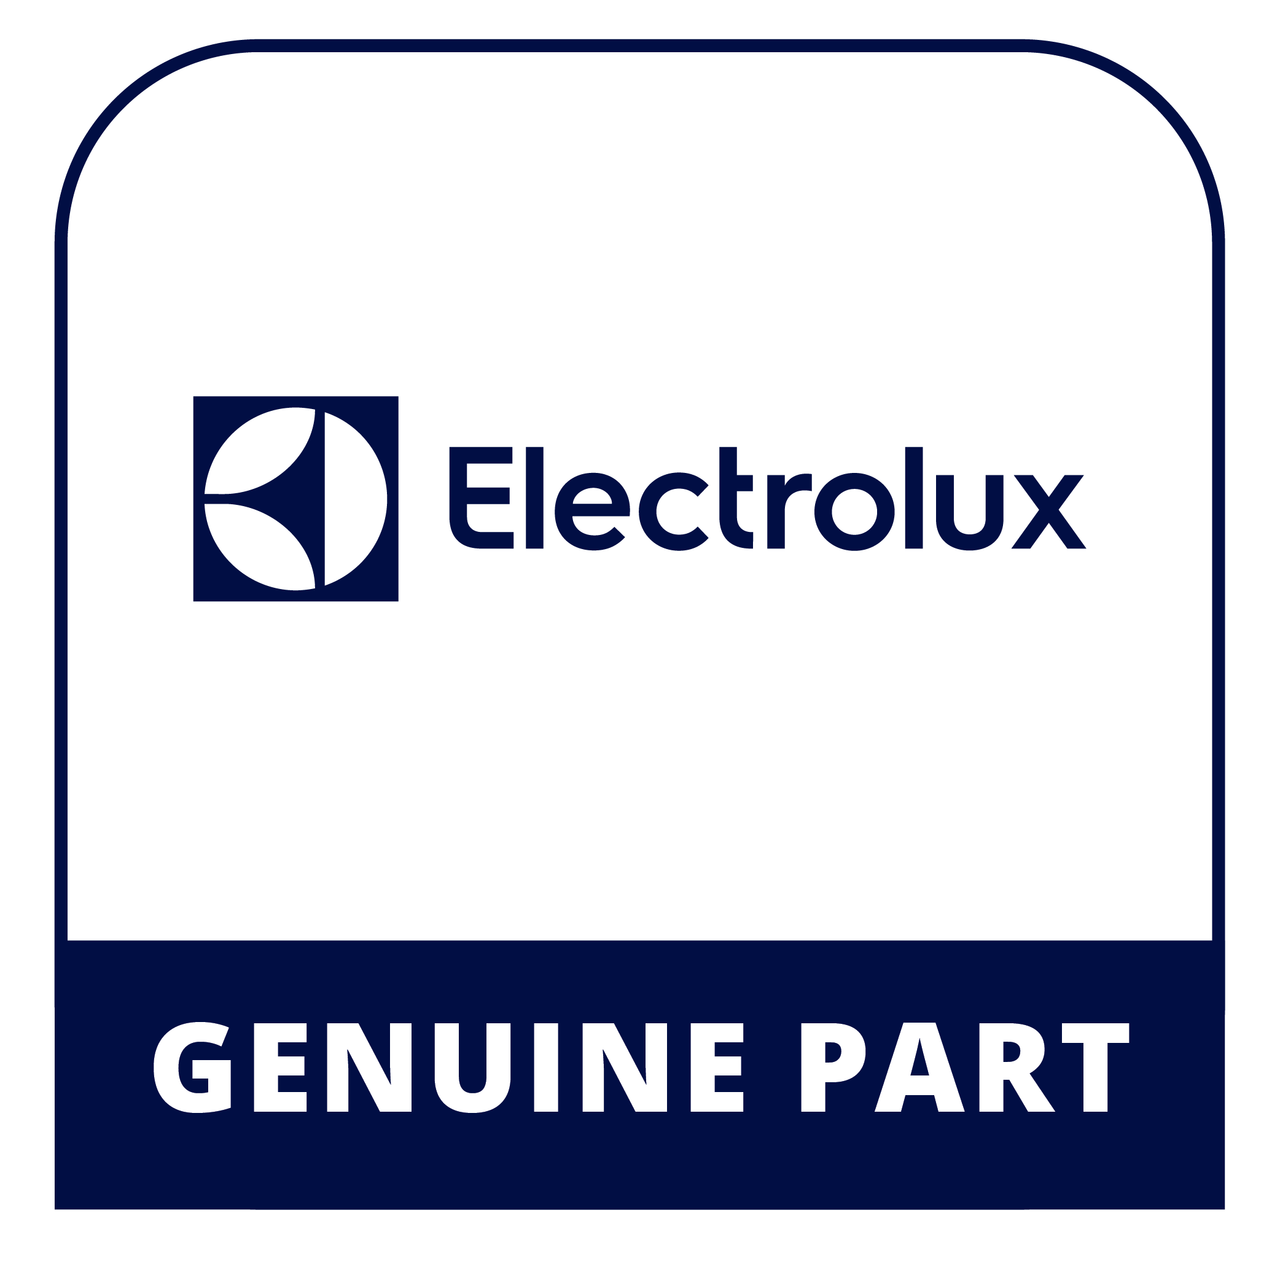 Frigidaire - Electrolux 5304475104 - Compressor Kit - Genuine Electrolux Part